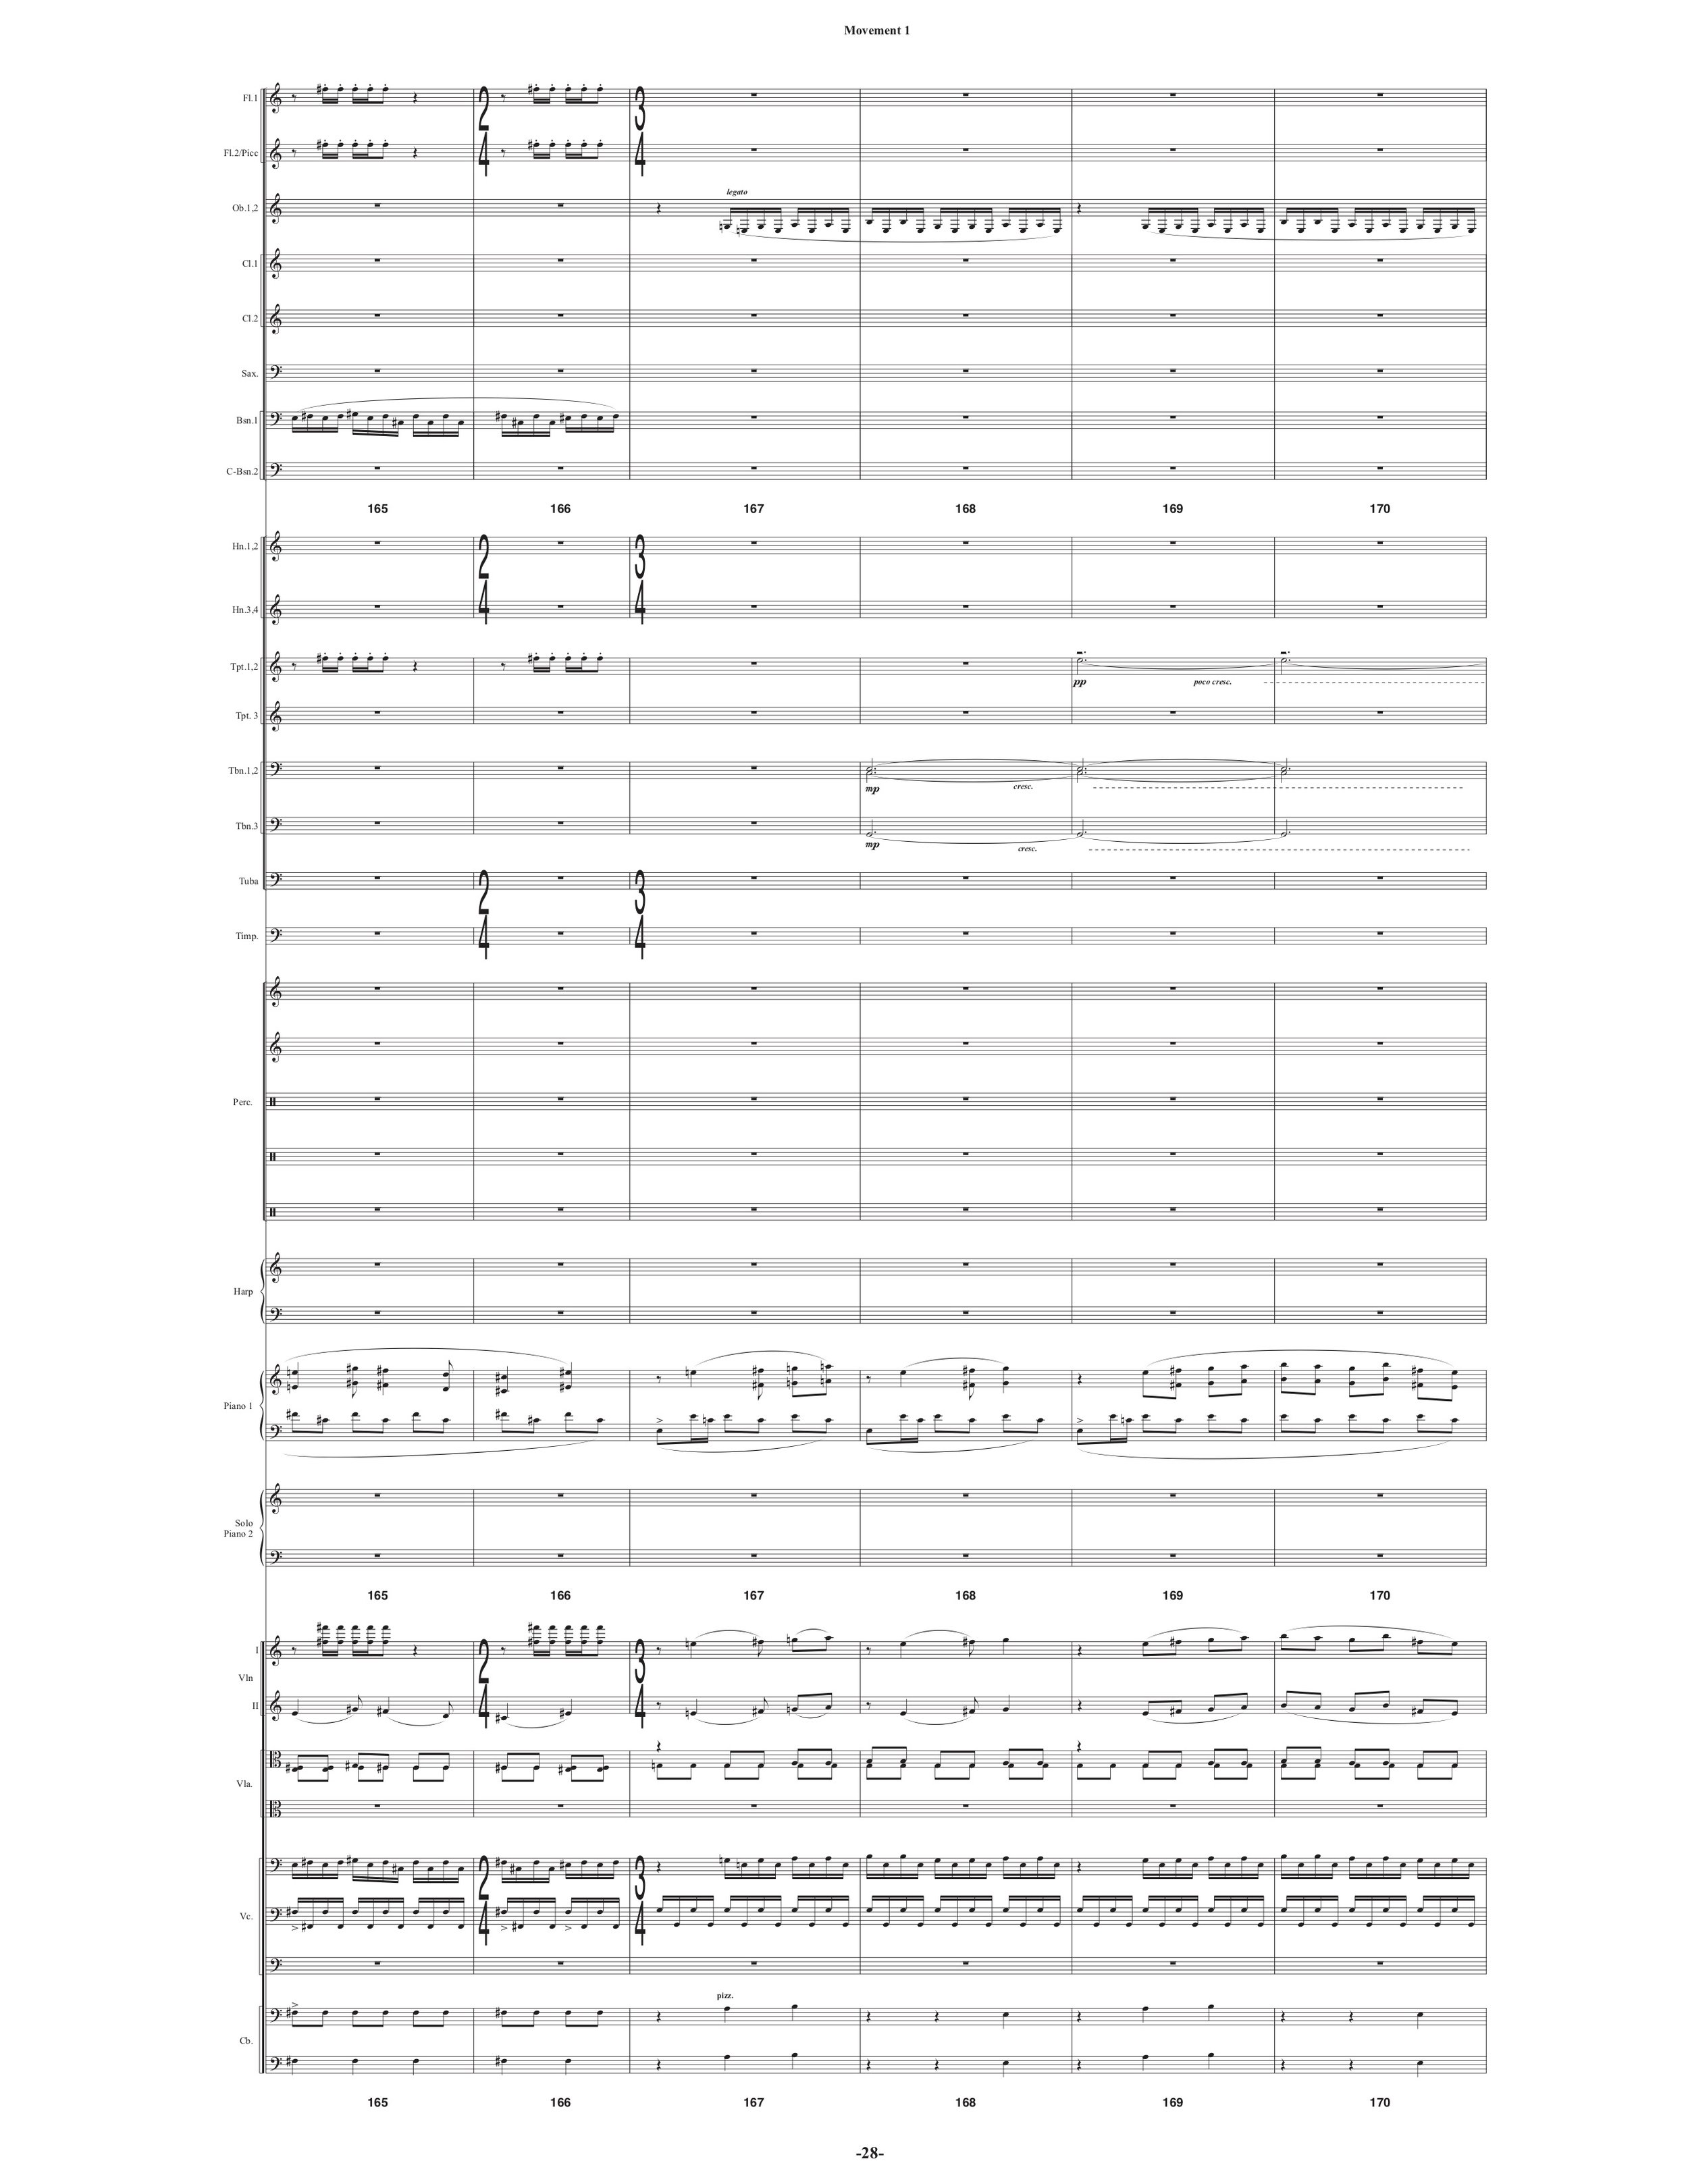 Symphony_Orch & 2 Pianos p33.jpg